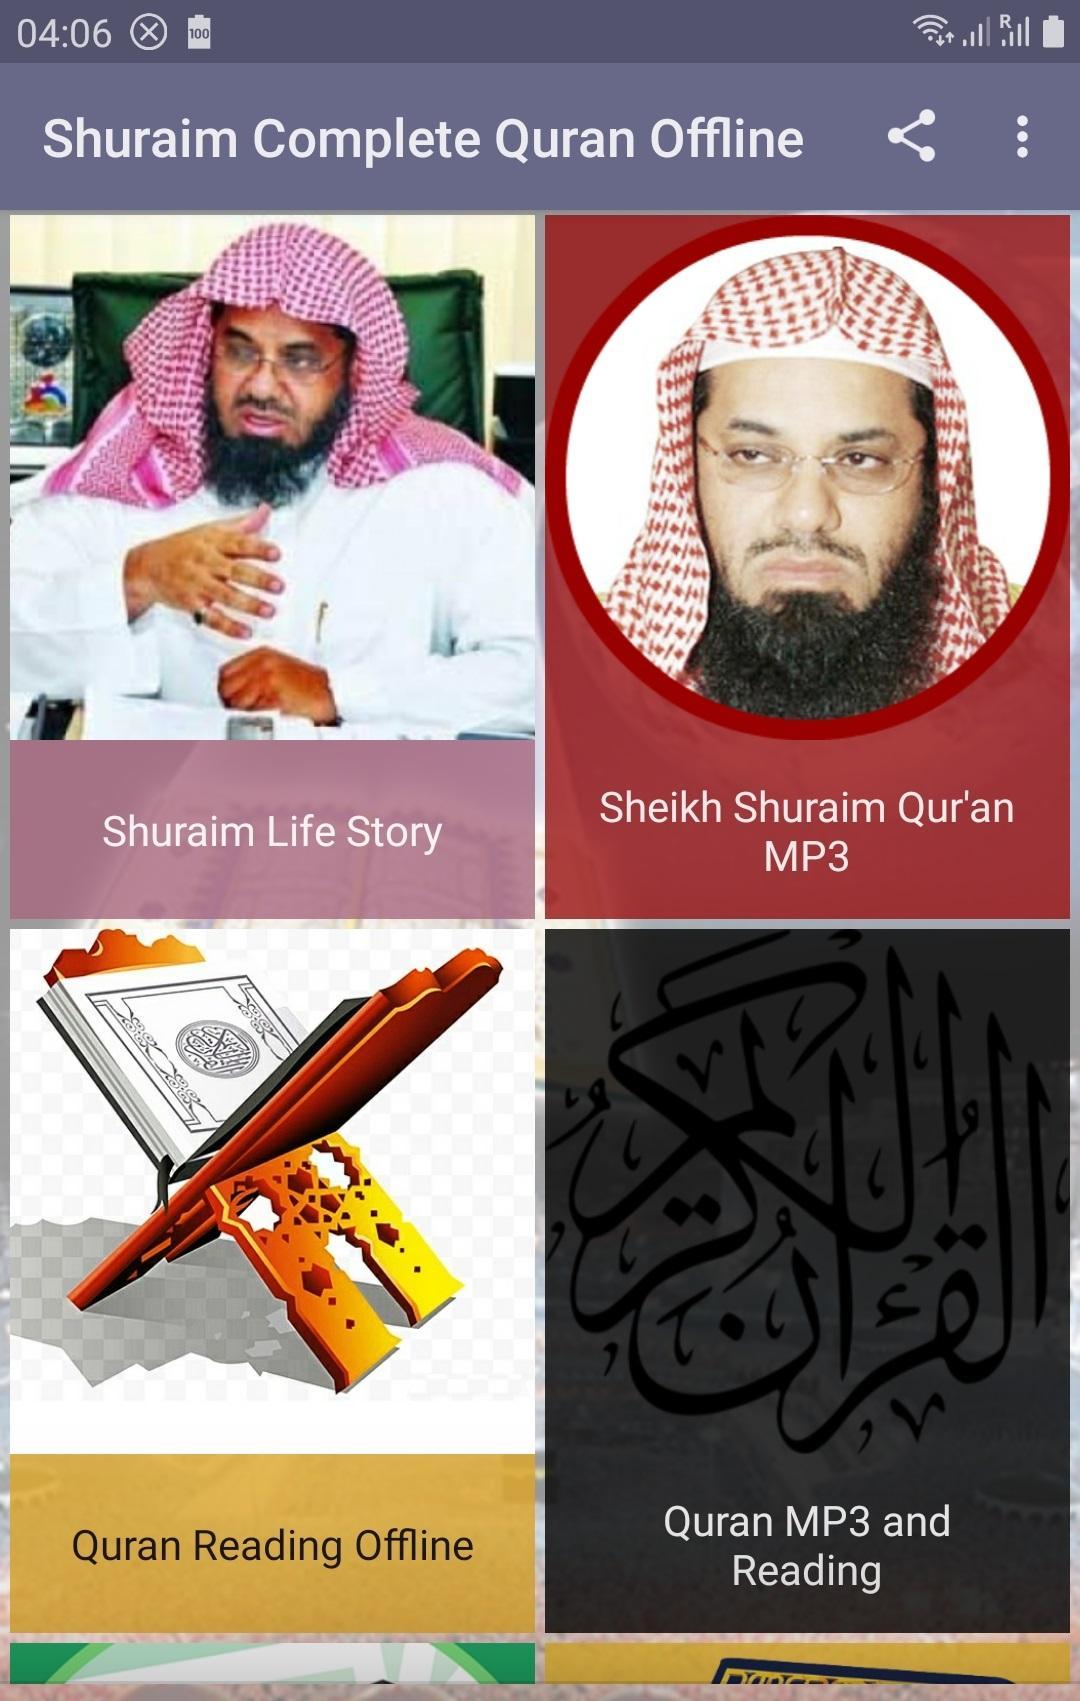 Shuraim Complete Quran Offline APK for Android Download